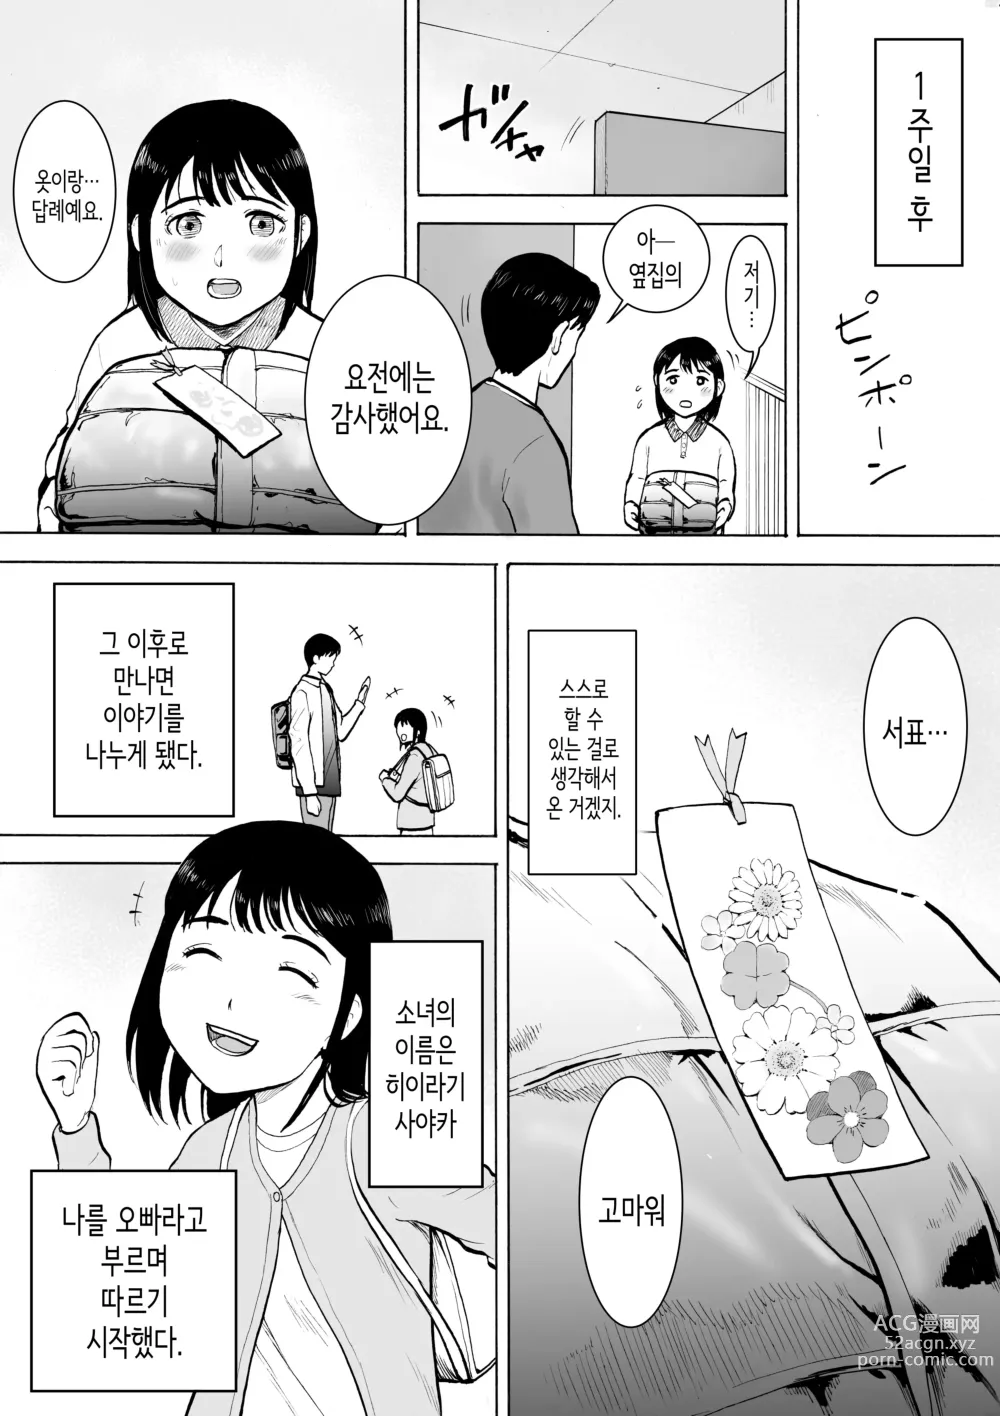 Page 4 of doujinshi “18-Sai”│『18살』